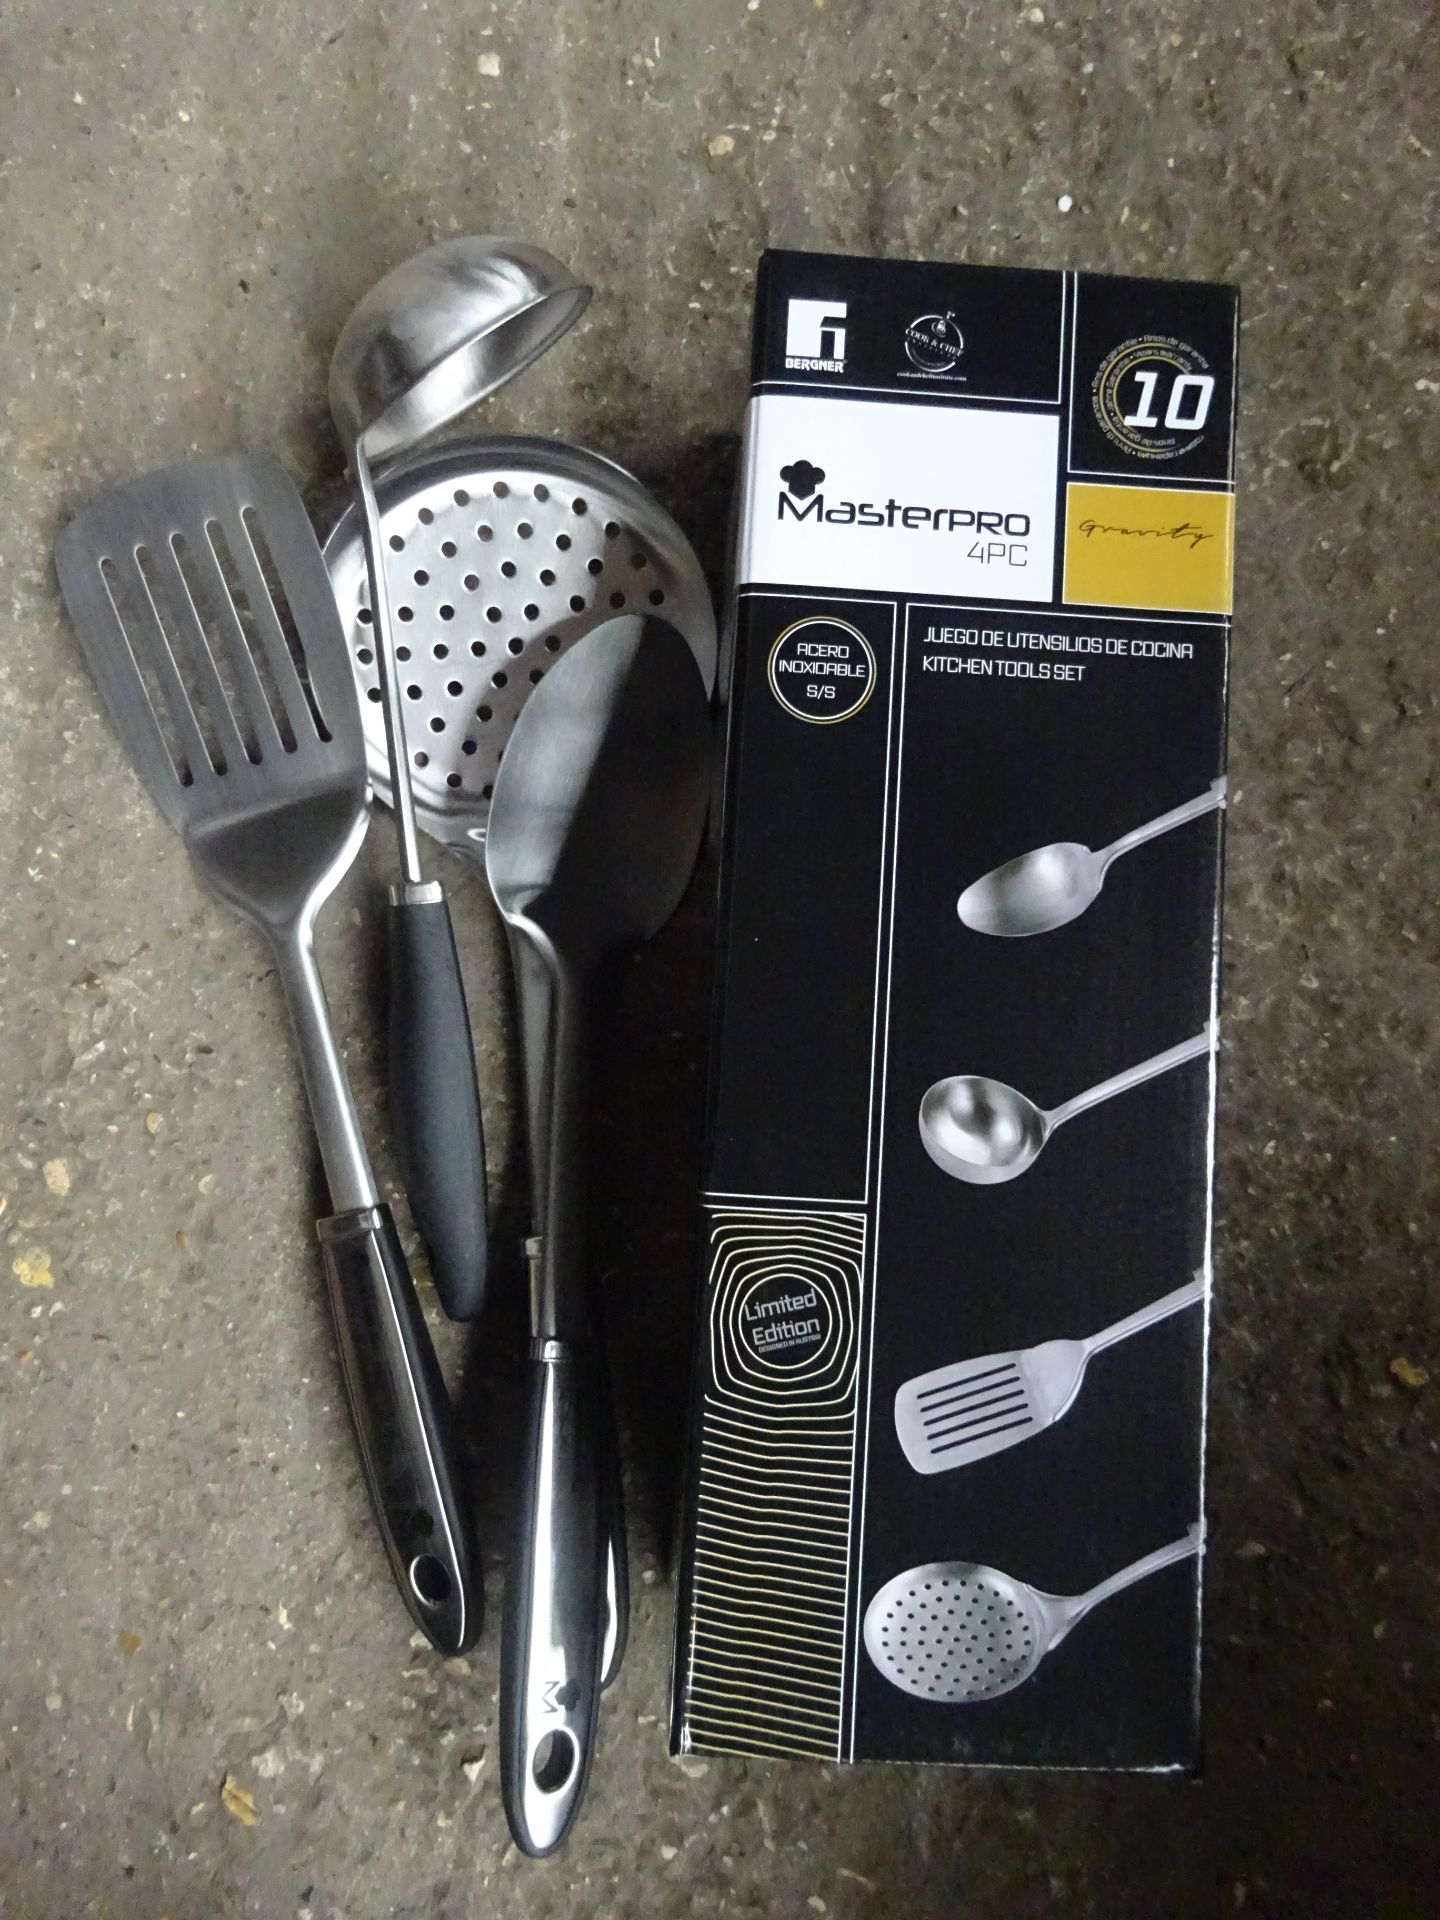 Masterpro 4pc kitchen utensil set